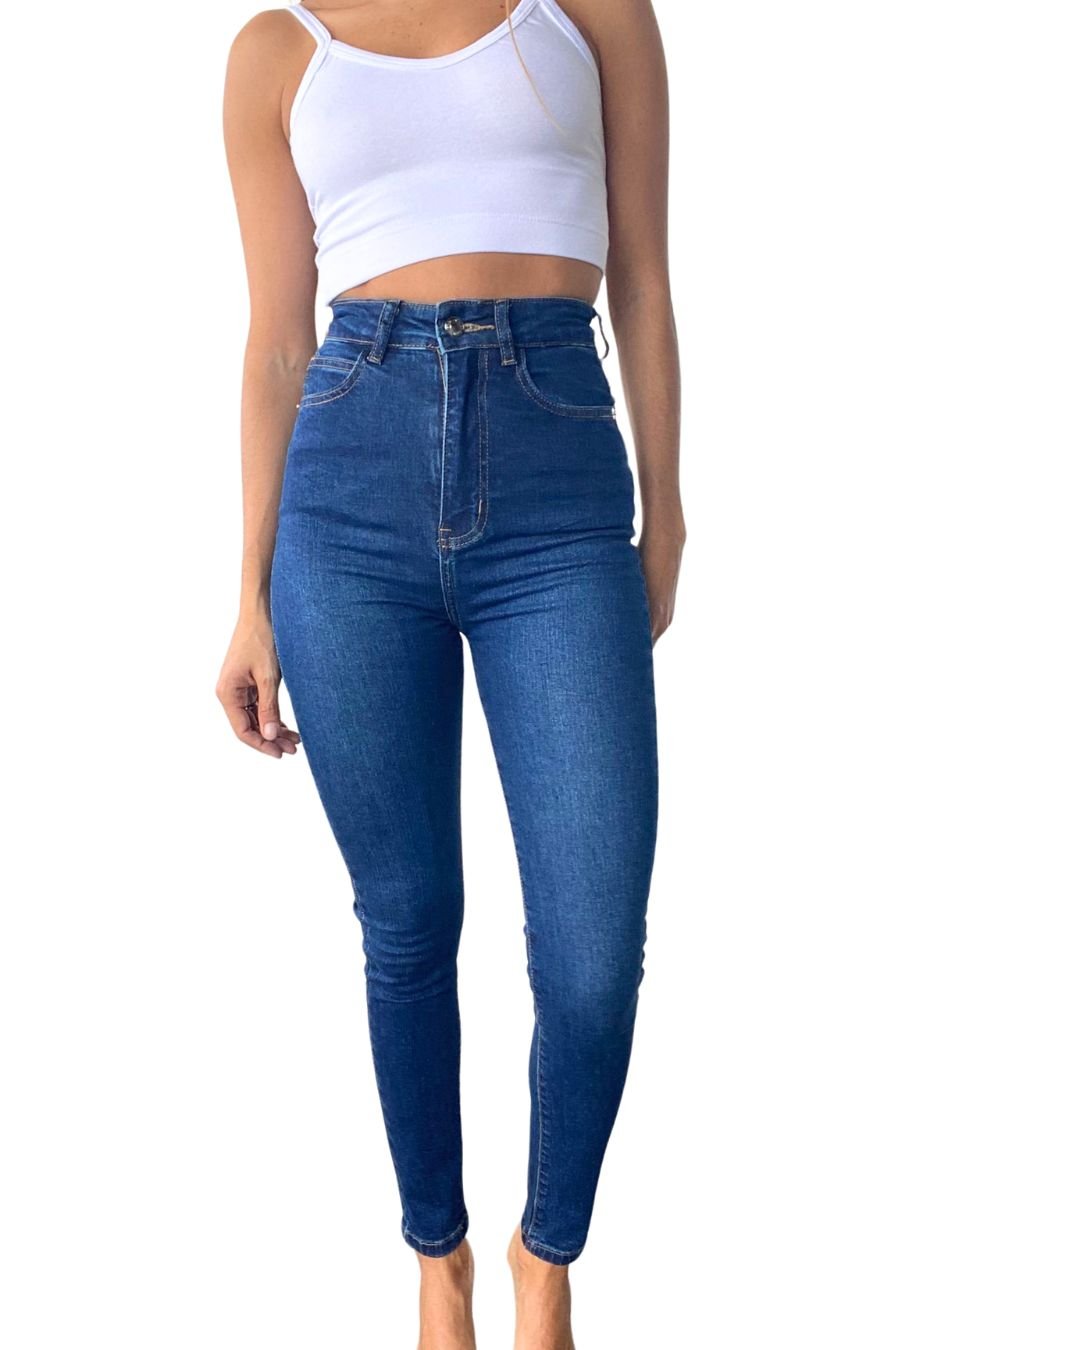 Gunas High-Rise Skinny Jean #FlatteringFit – Chipre Basic Denim